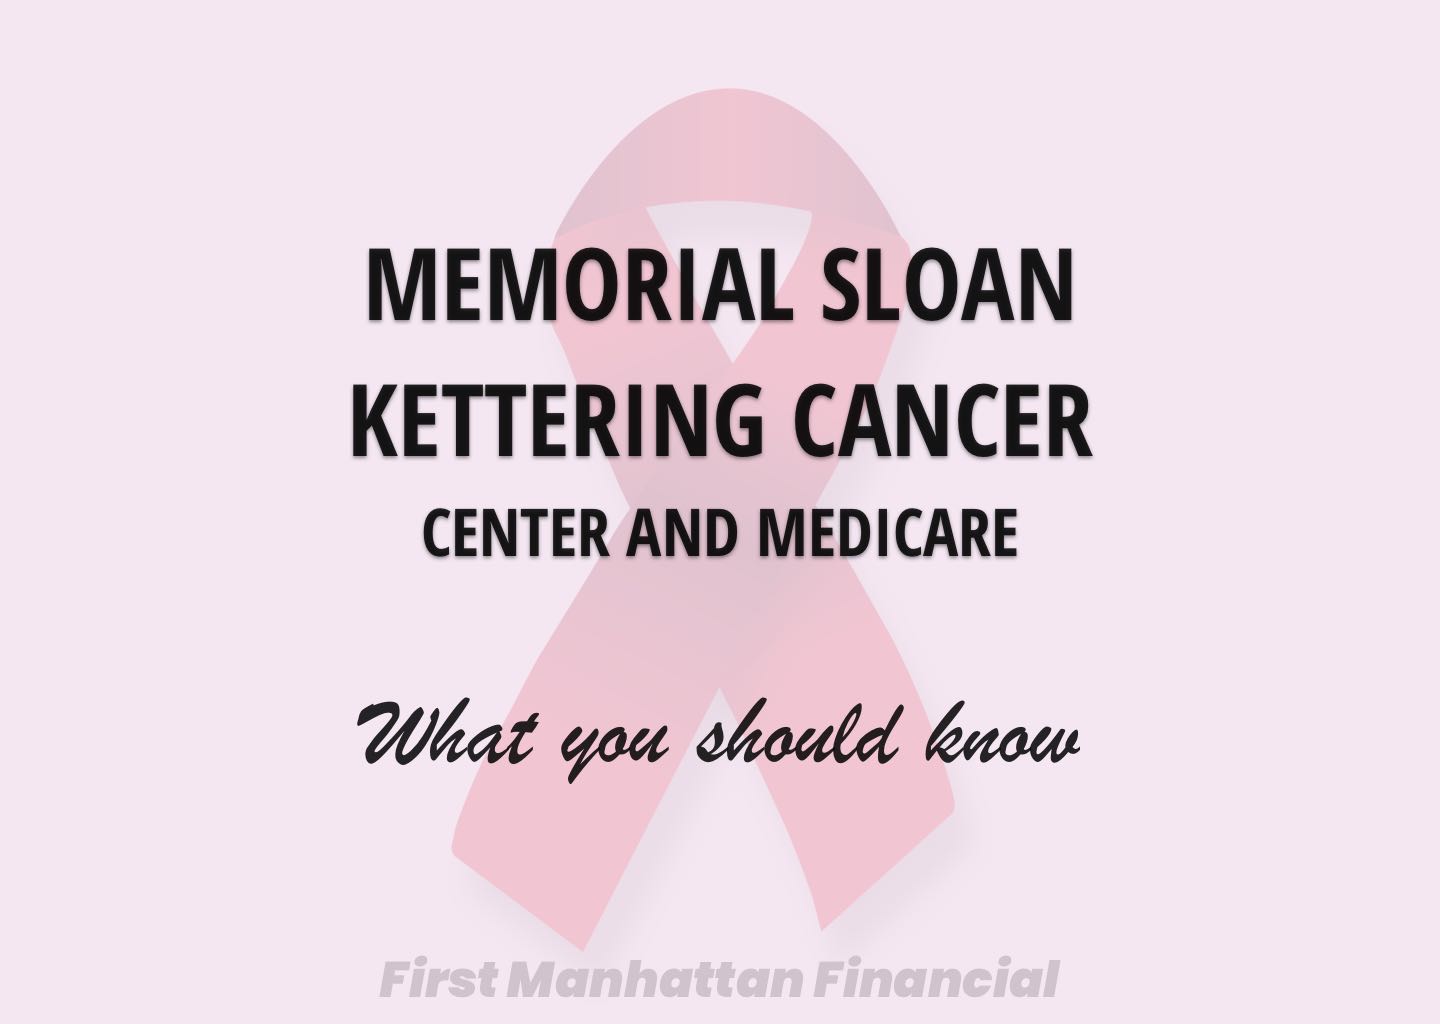 Memorial Sloan Kettering Cancer Center (MSK) and Medicare | First Manhattan Financial